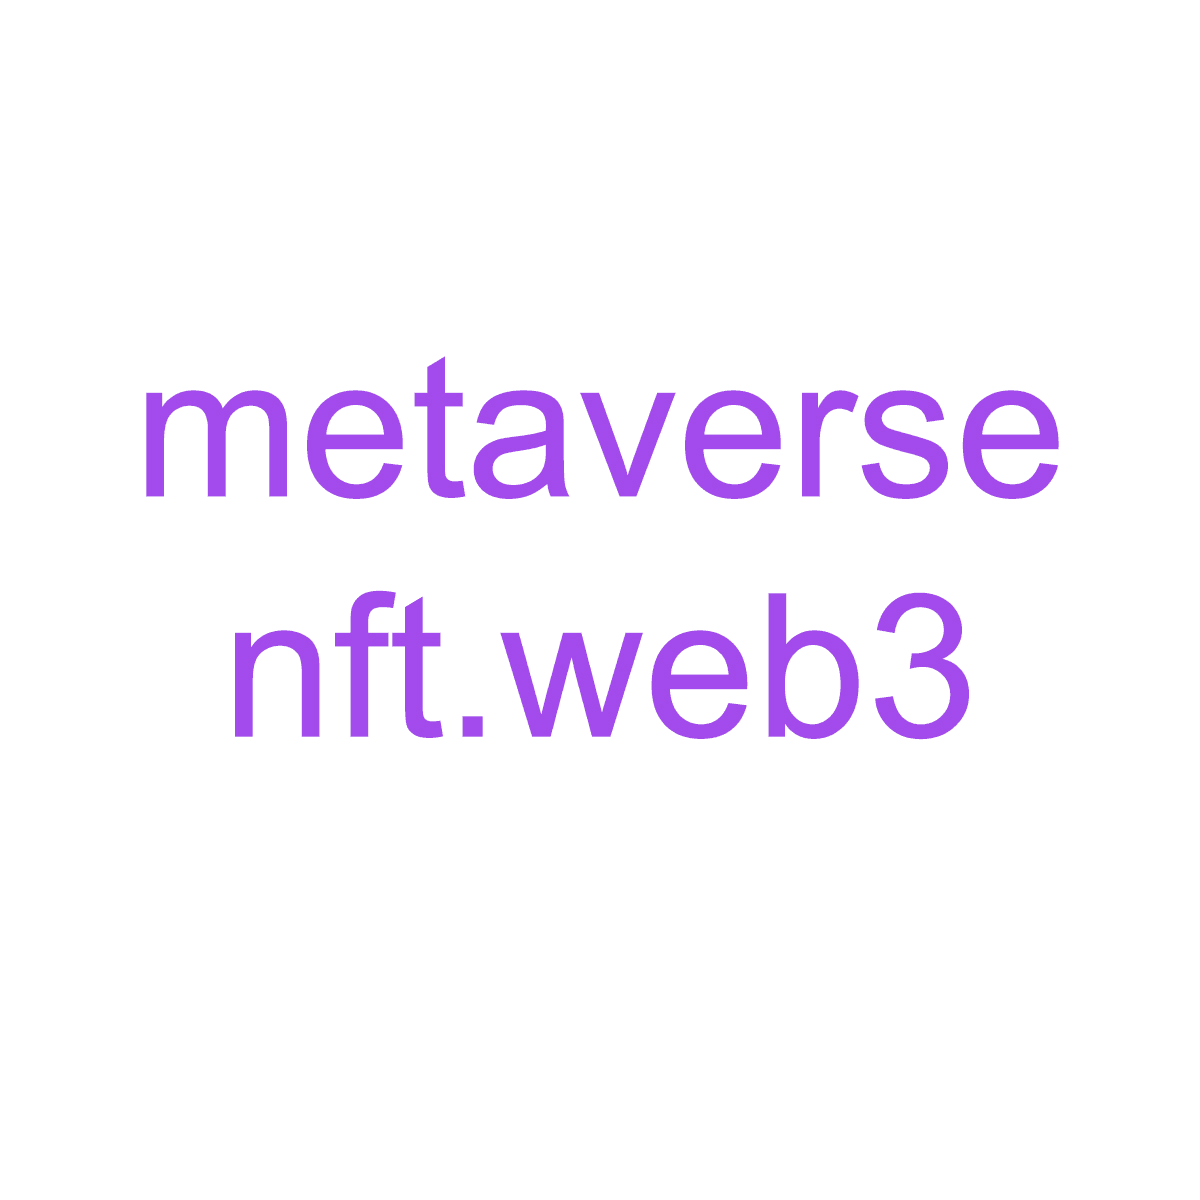 metaversenftweb3